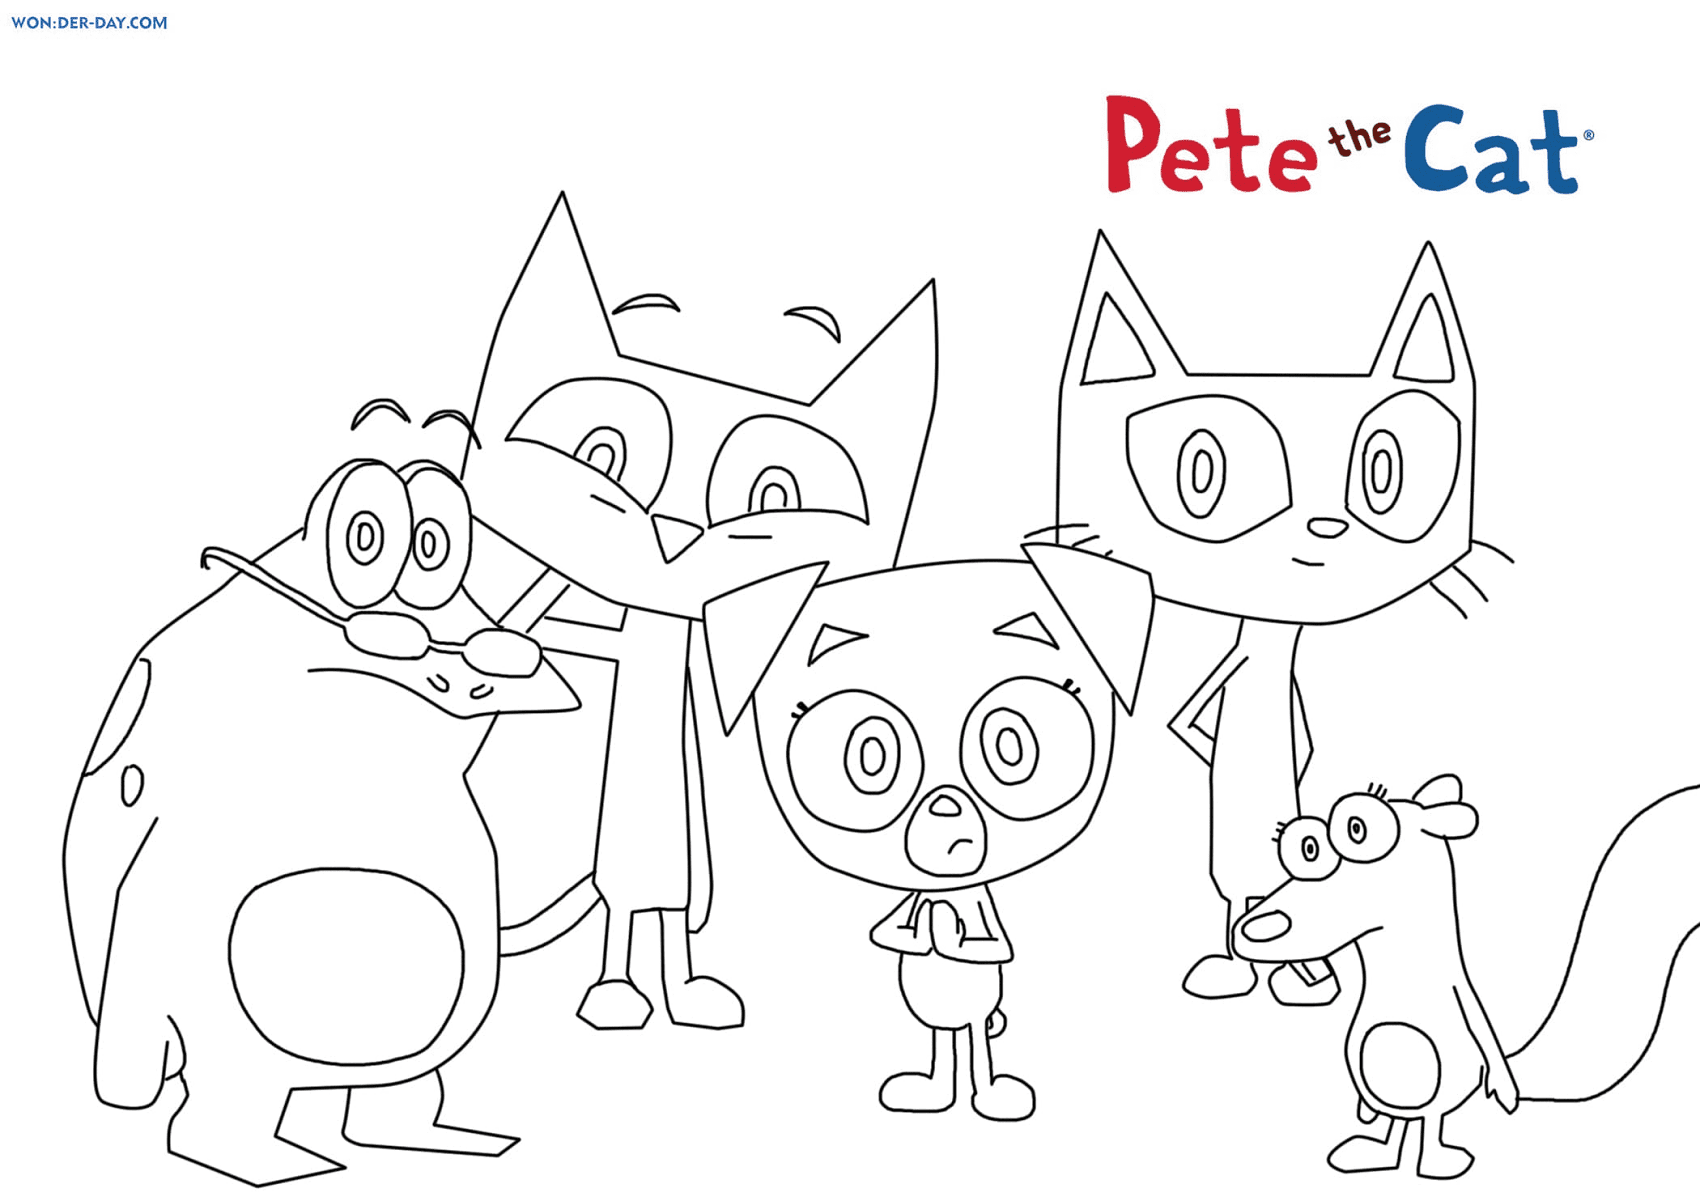 Desenho de Pete o gato e seus amigos para colorir